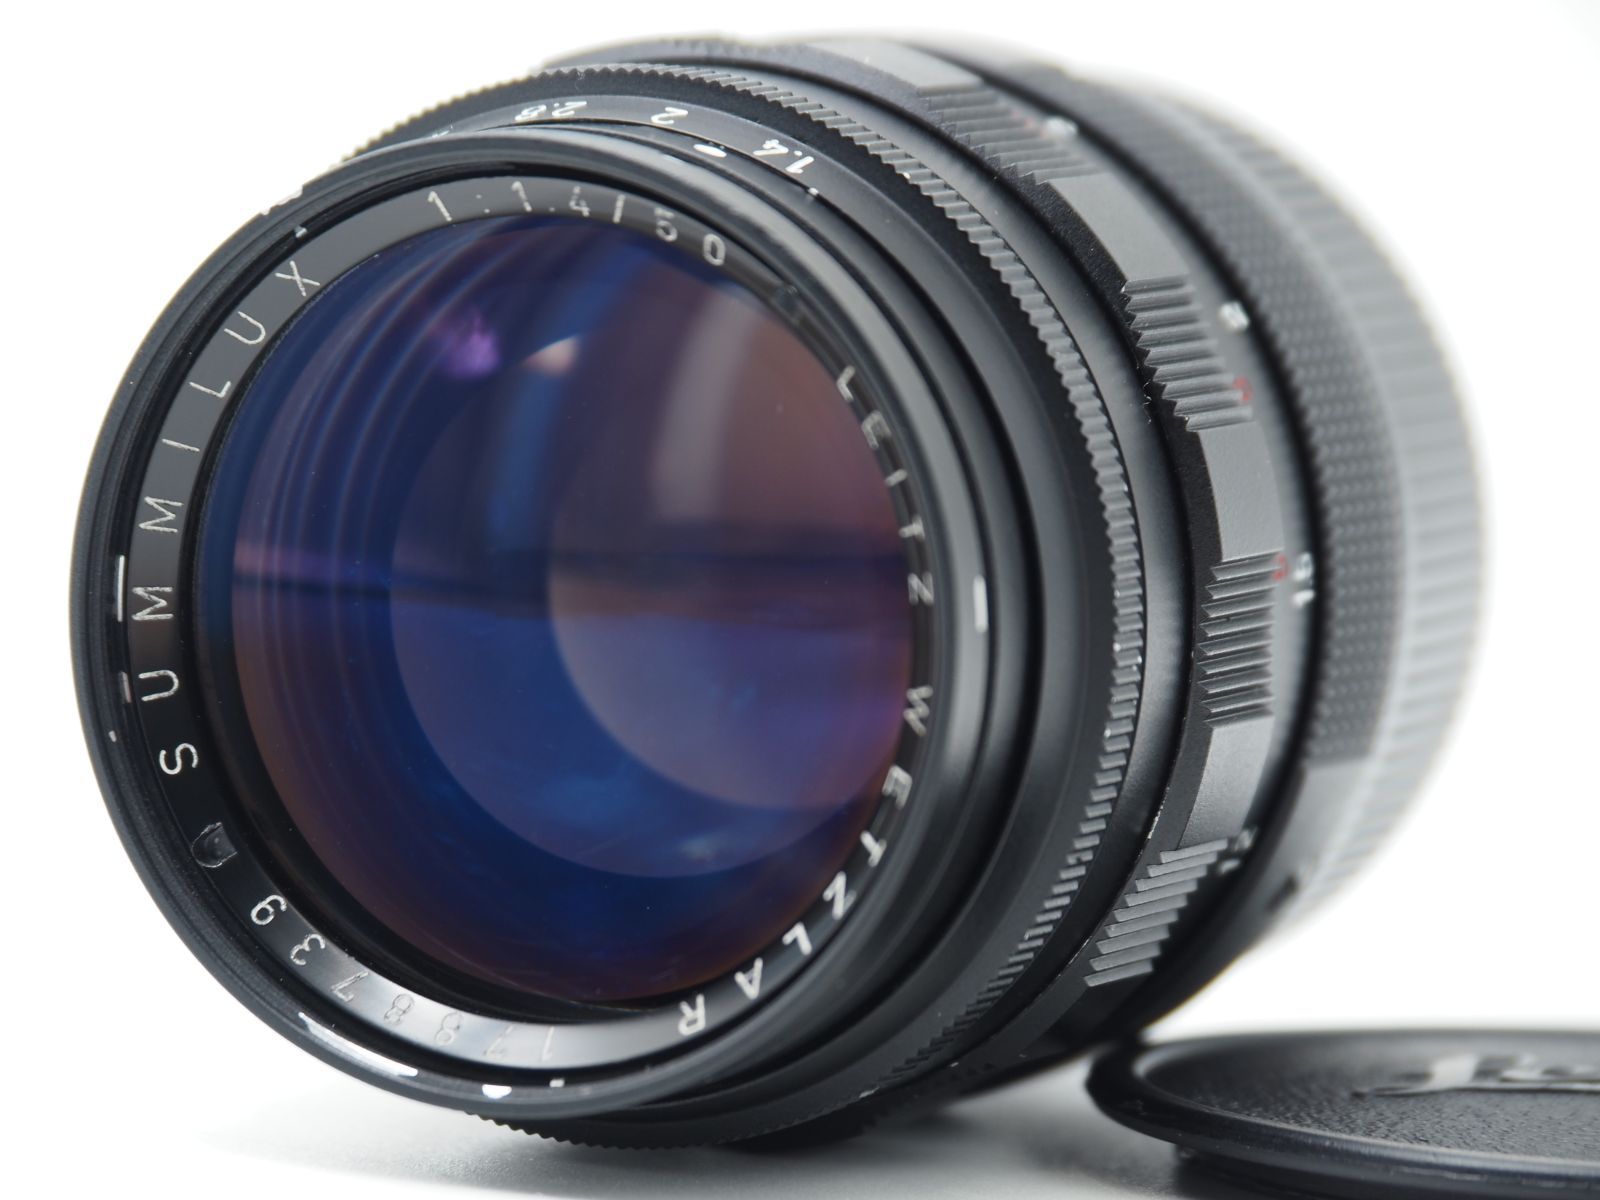 Leica Summilux 50mm F1.4 1st オーバーホール済み - カメラ